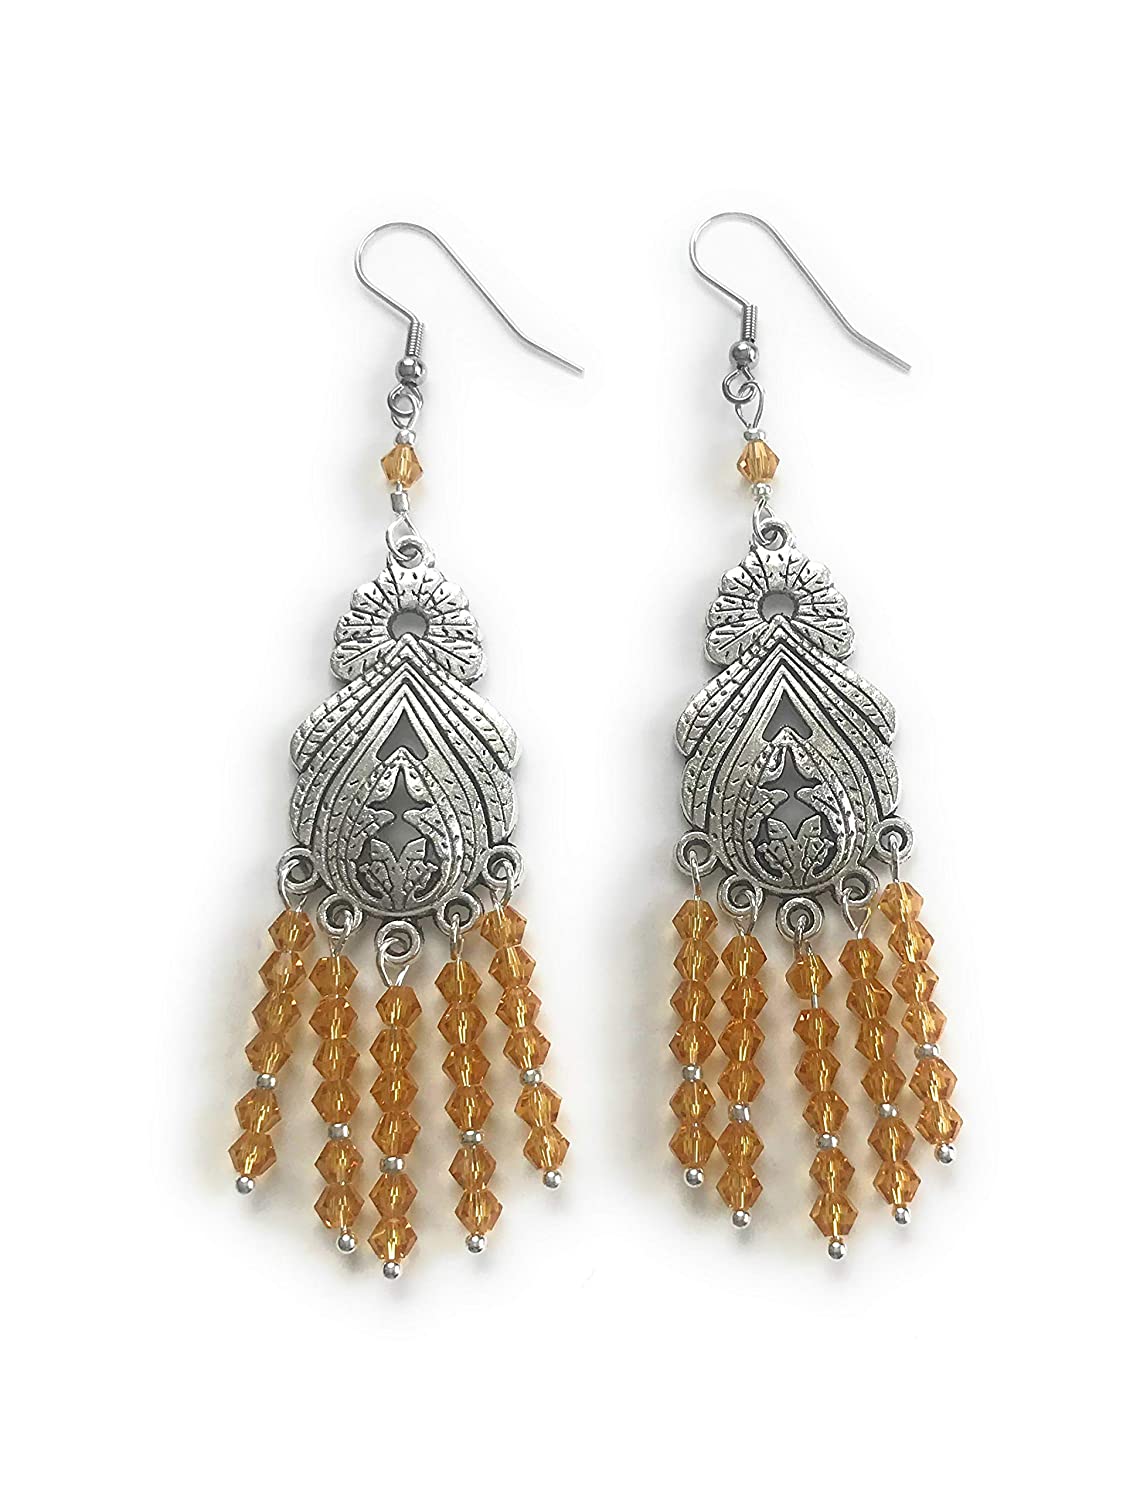 Amber Yellow Chandelier Earrings at Scott D Jewelry Designs